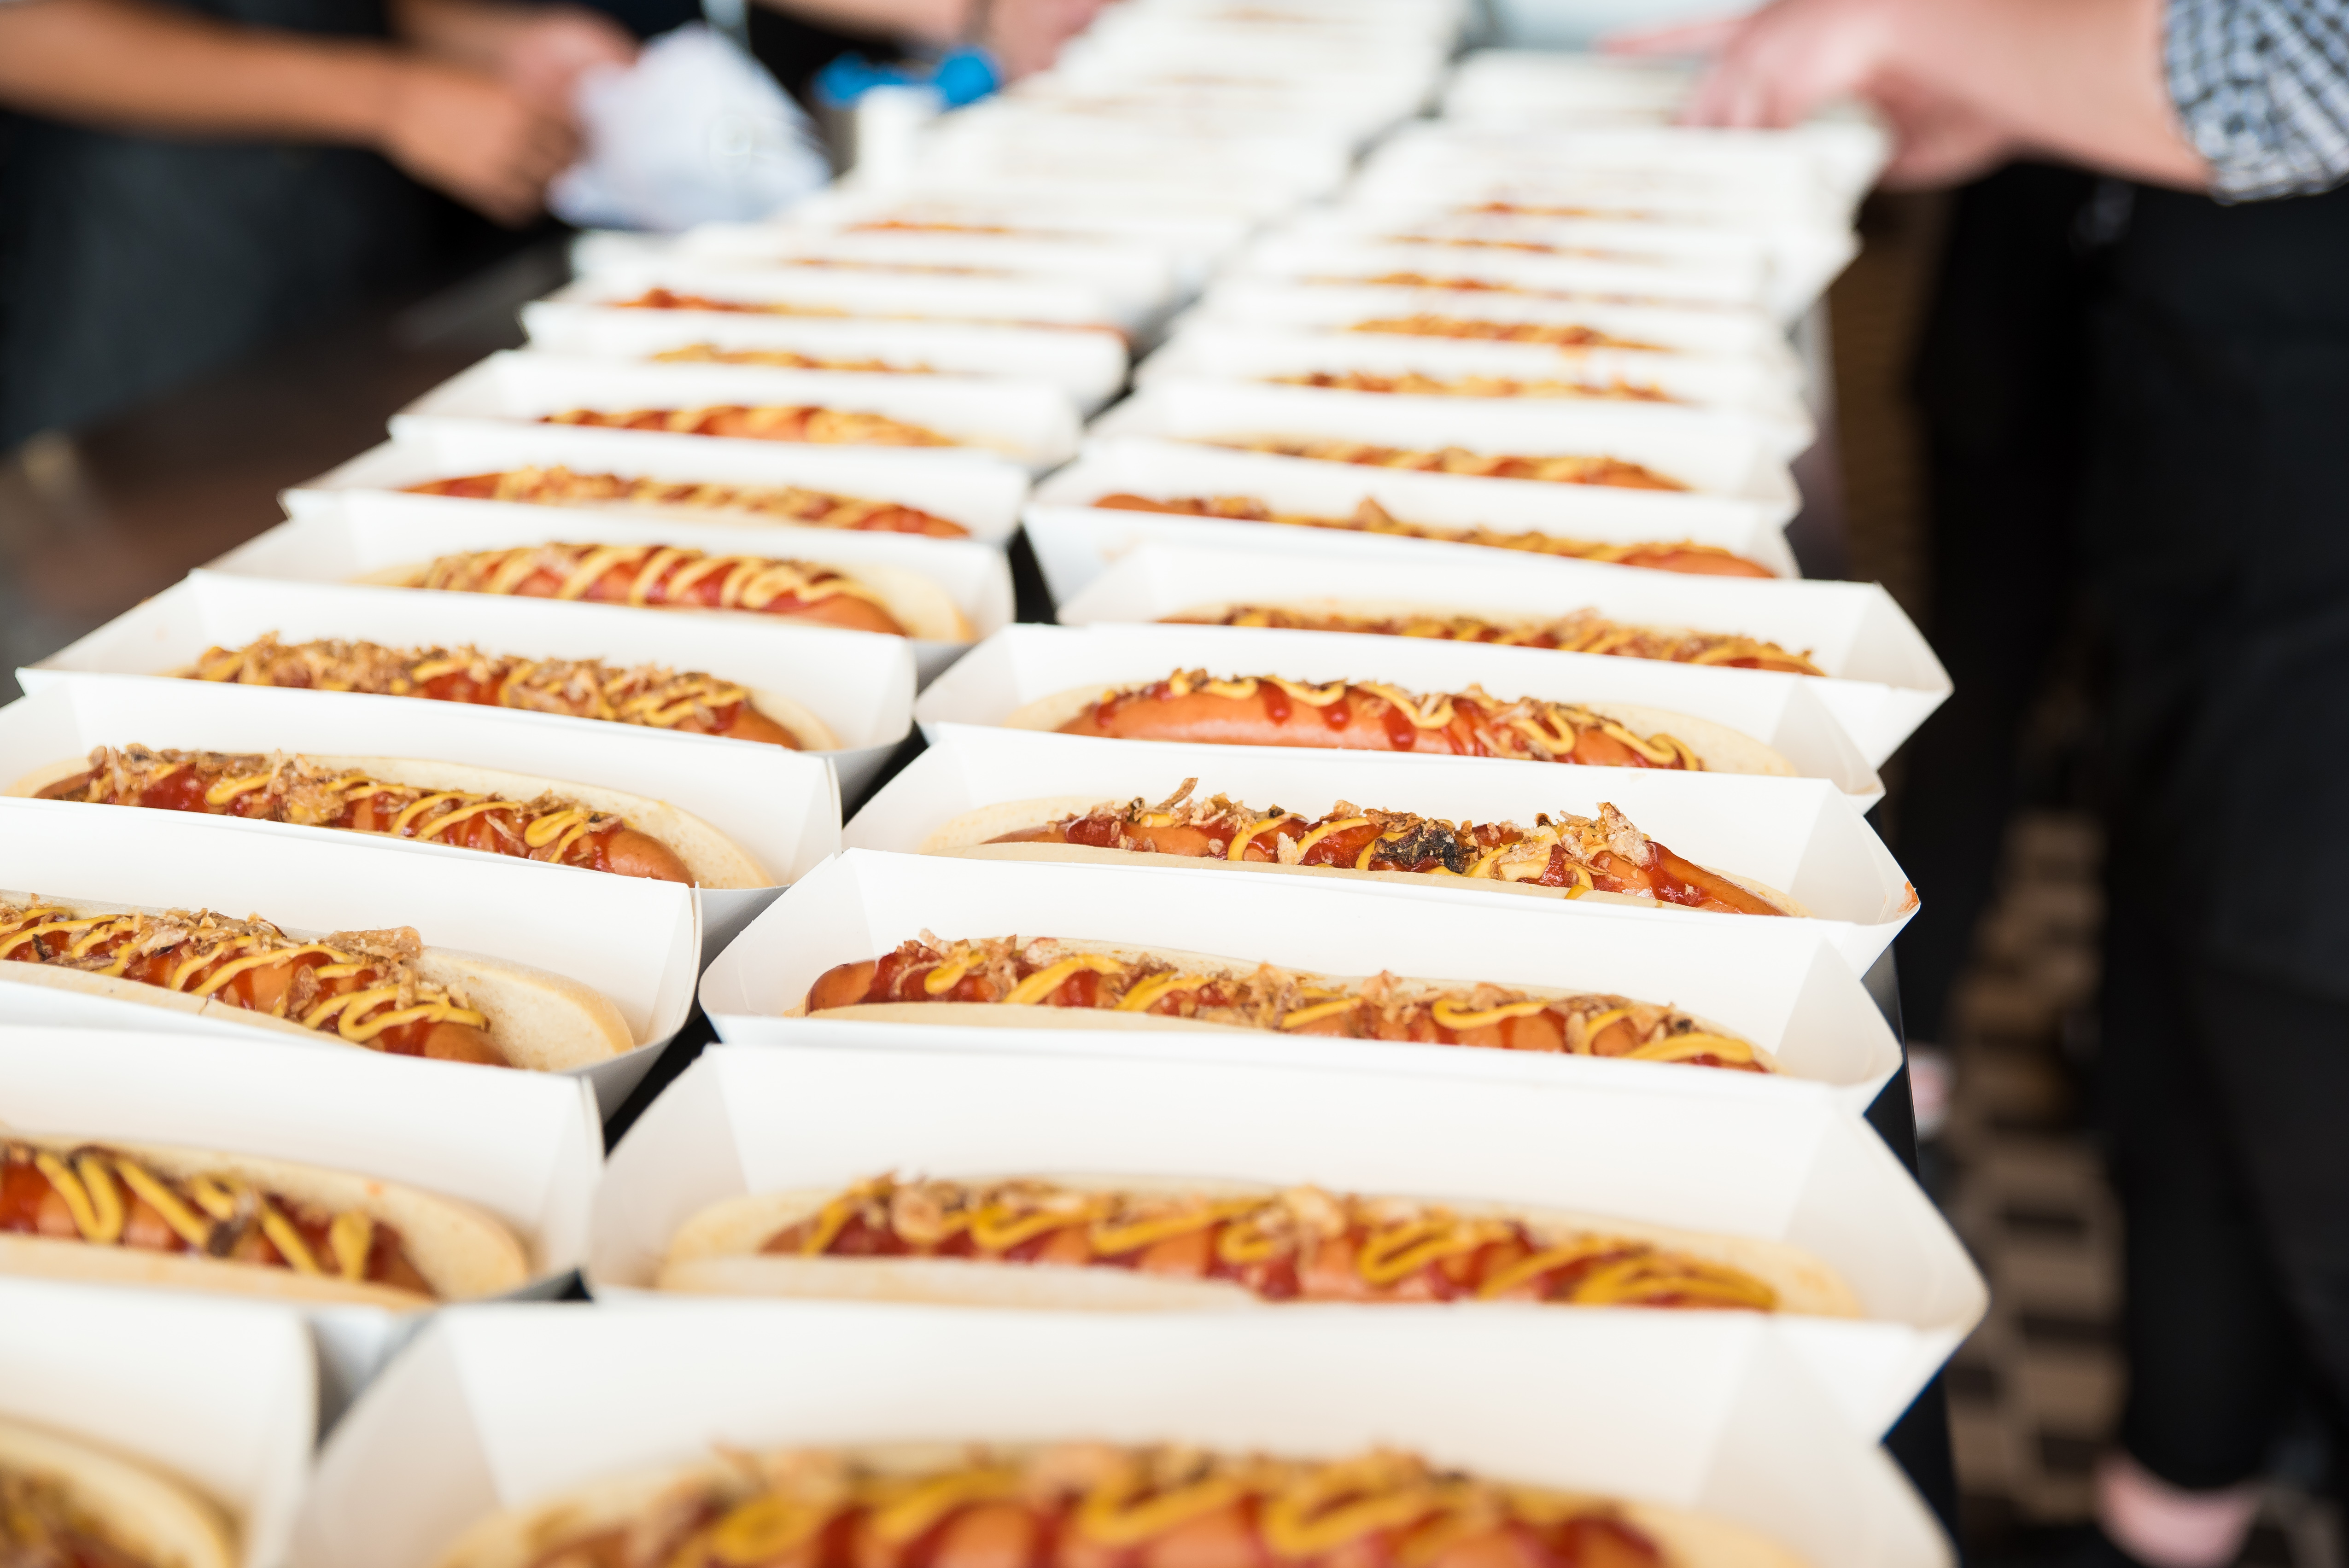 The Bavarian arrives in Charlestown with 500 free hotdog bonanza